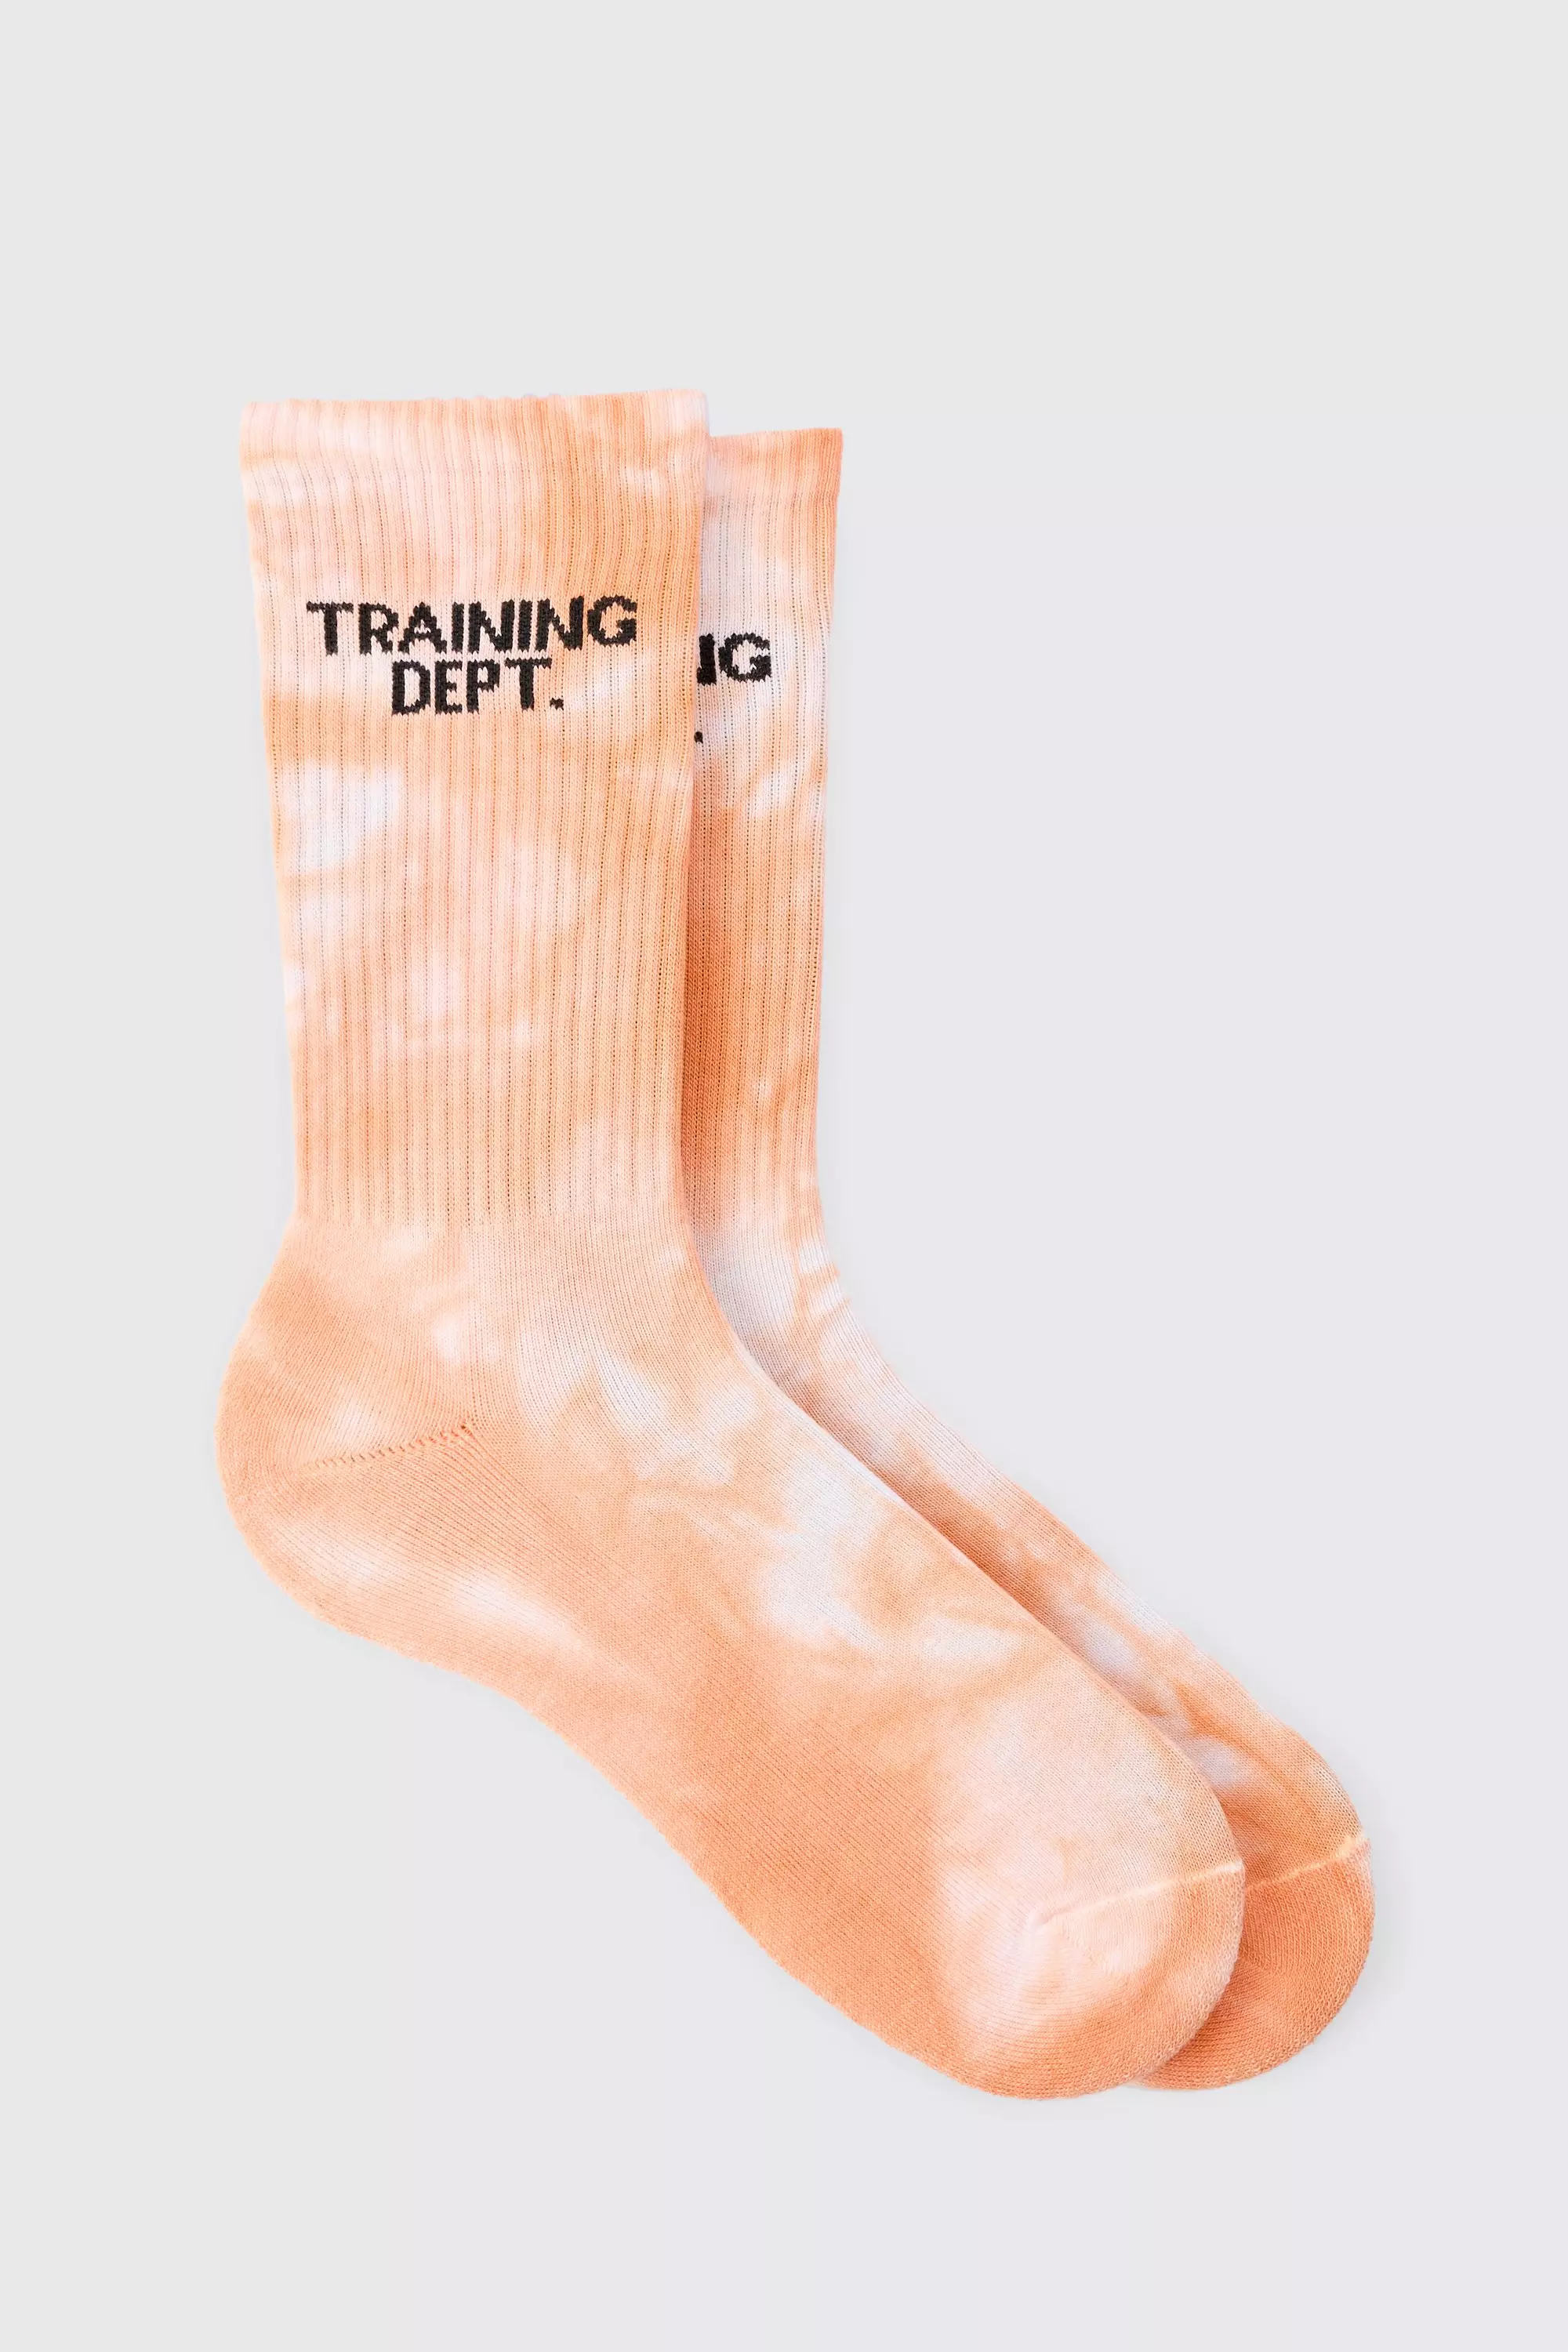 Man Active Training Dept Tie-dye Crew Socks Orange